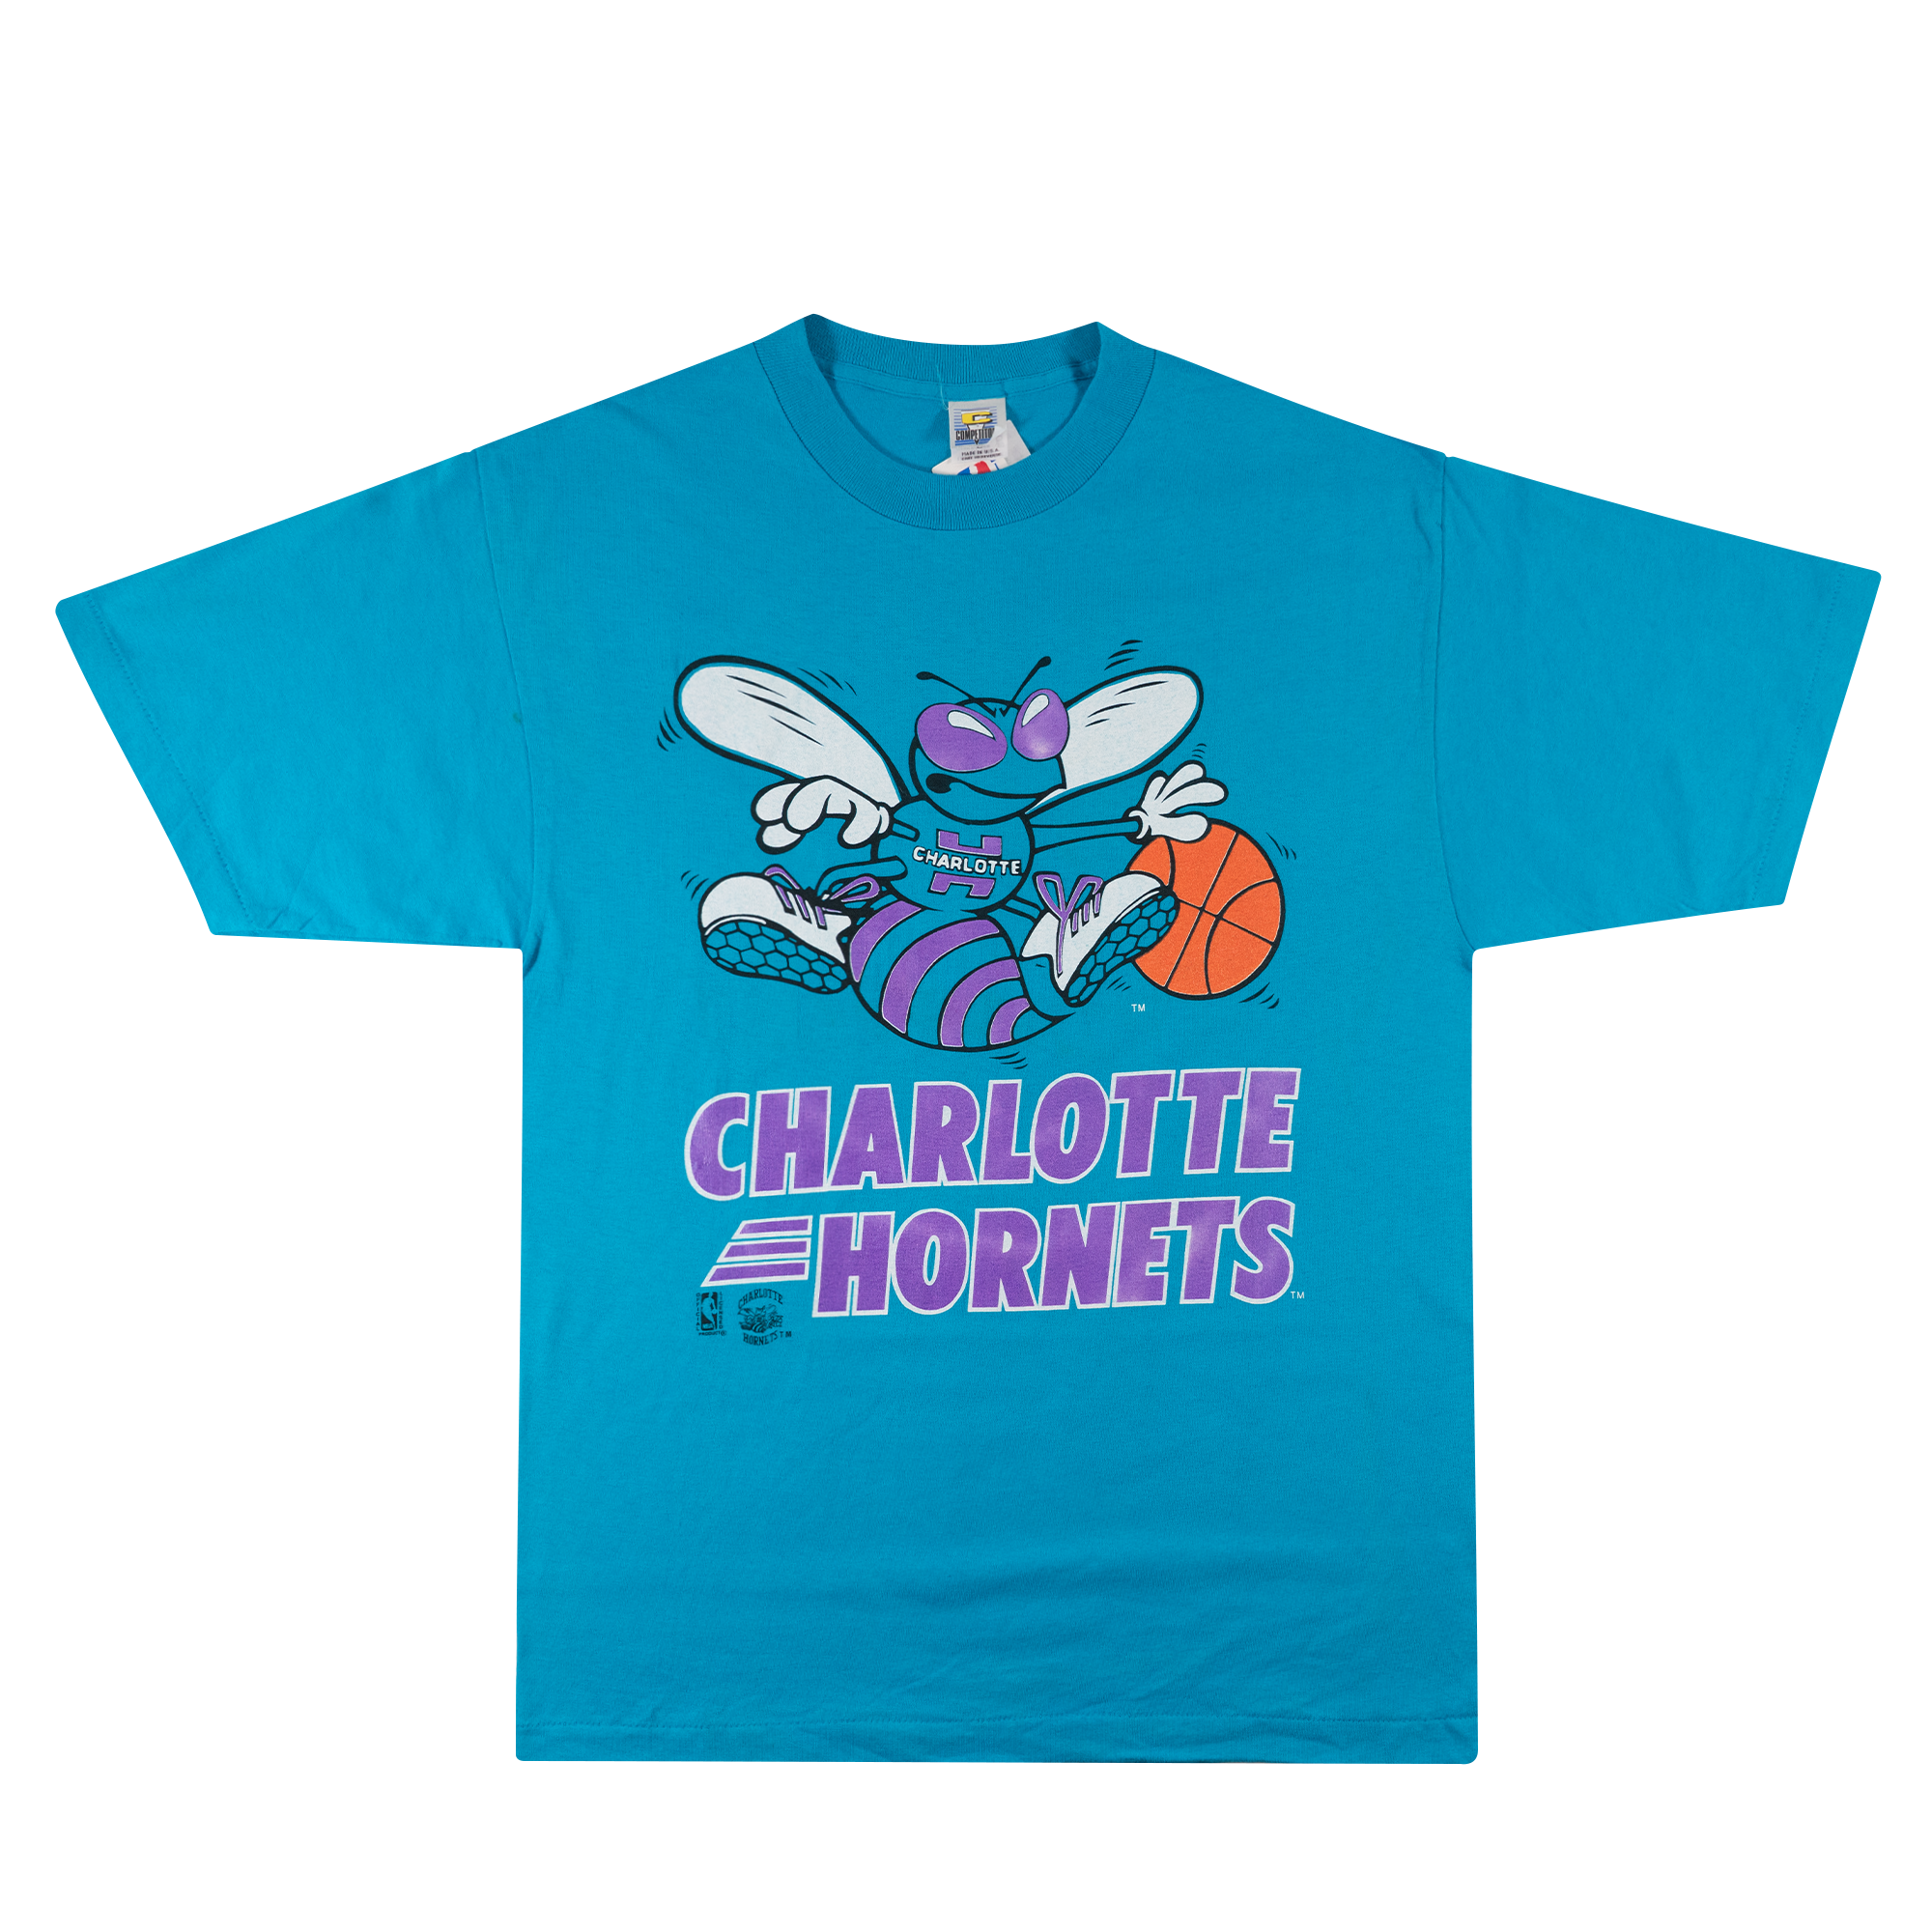 Charlotte Hornets Official Team Merchandise 90's NBA Tee Blue-PLUS